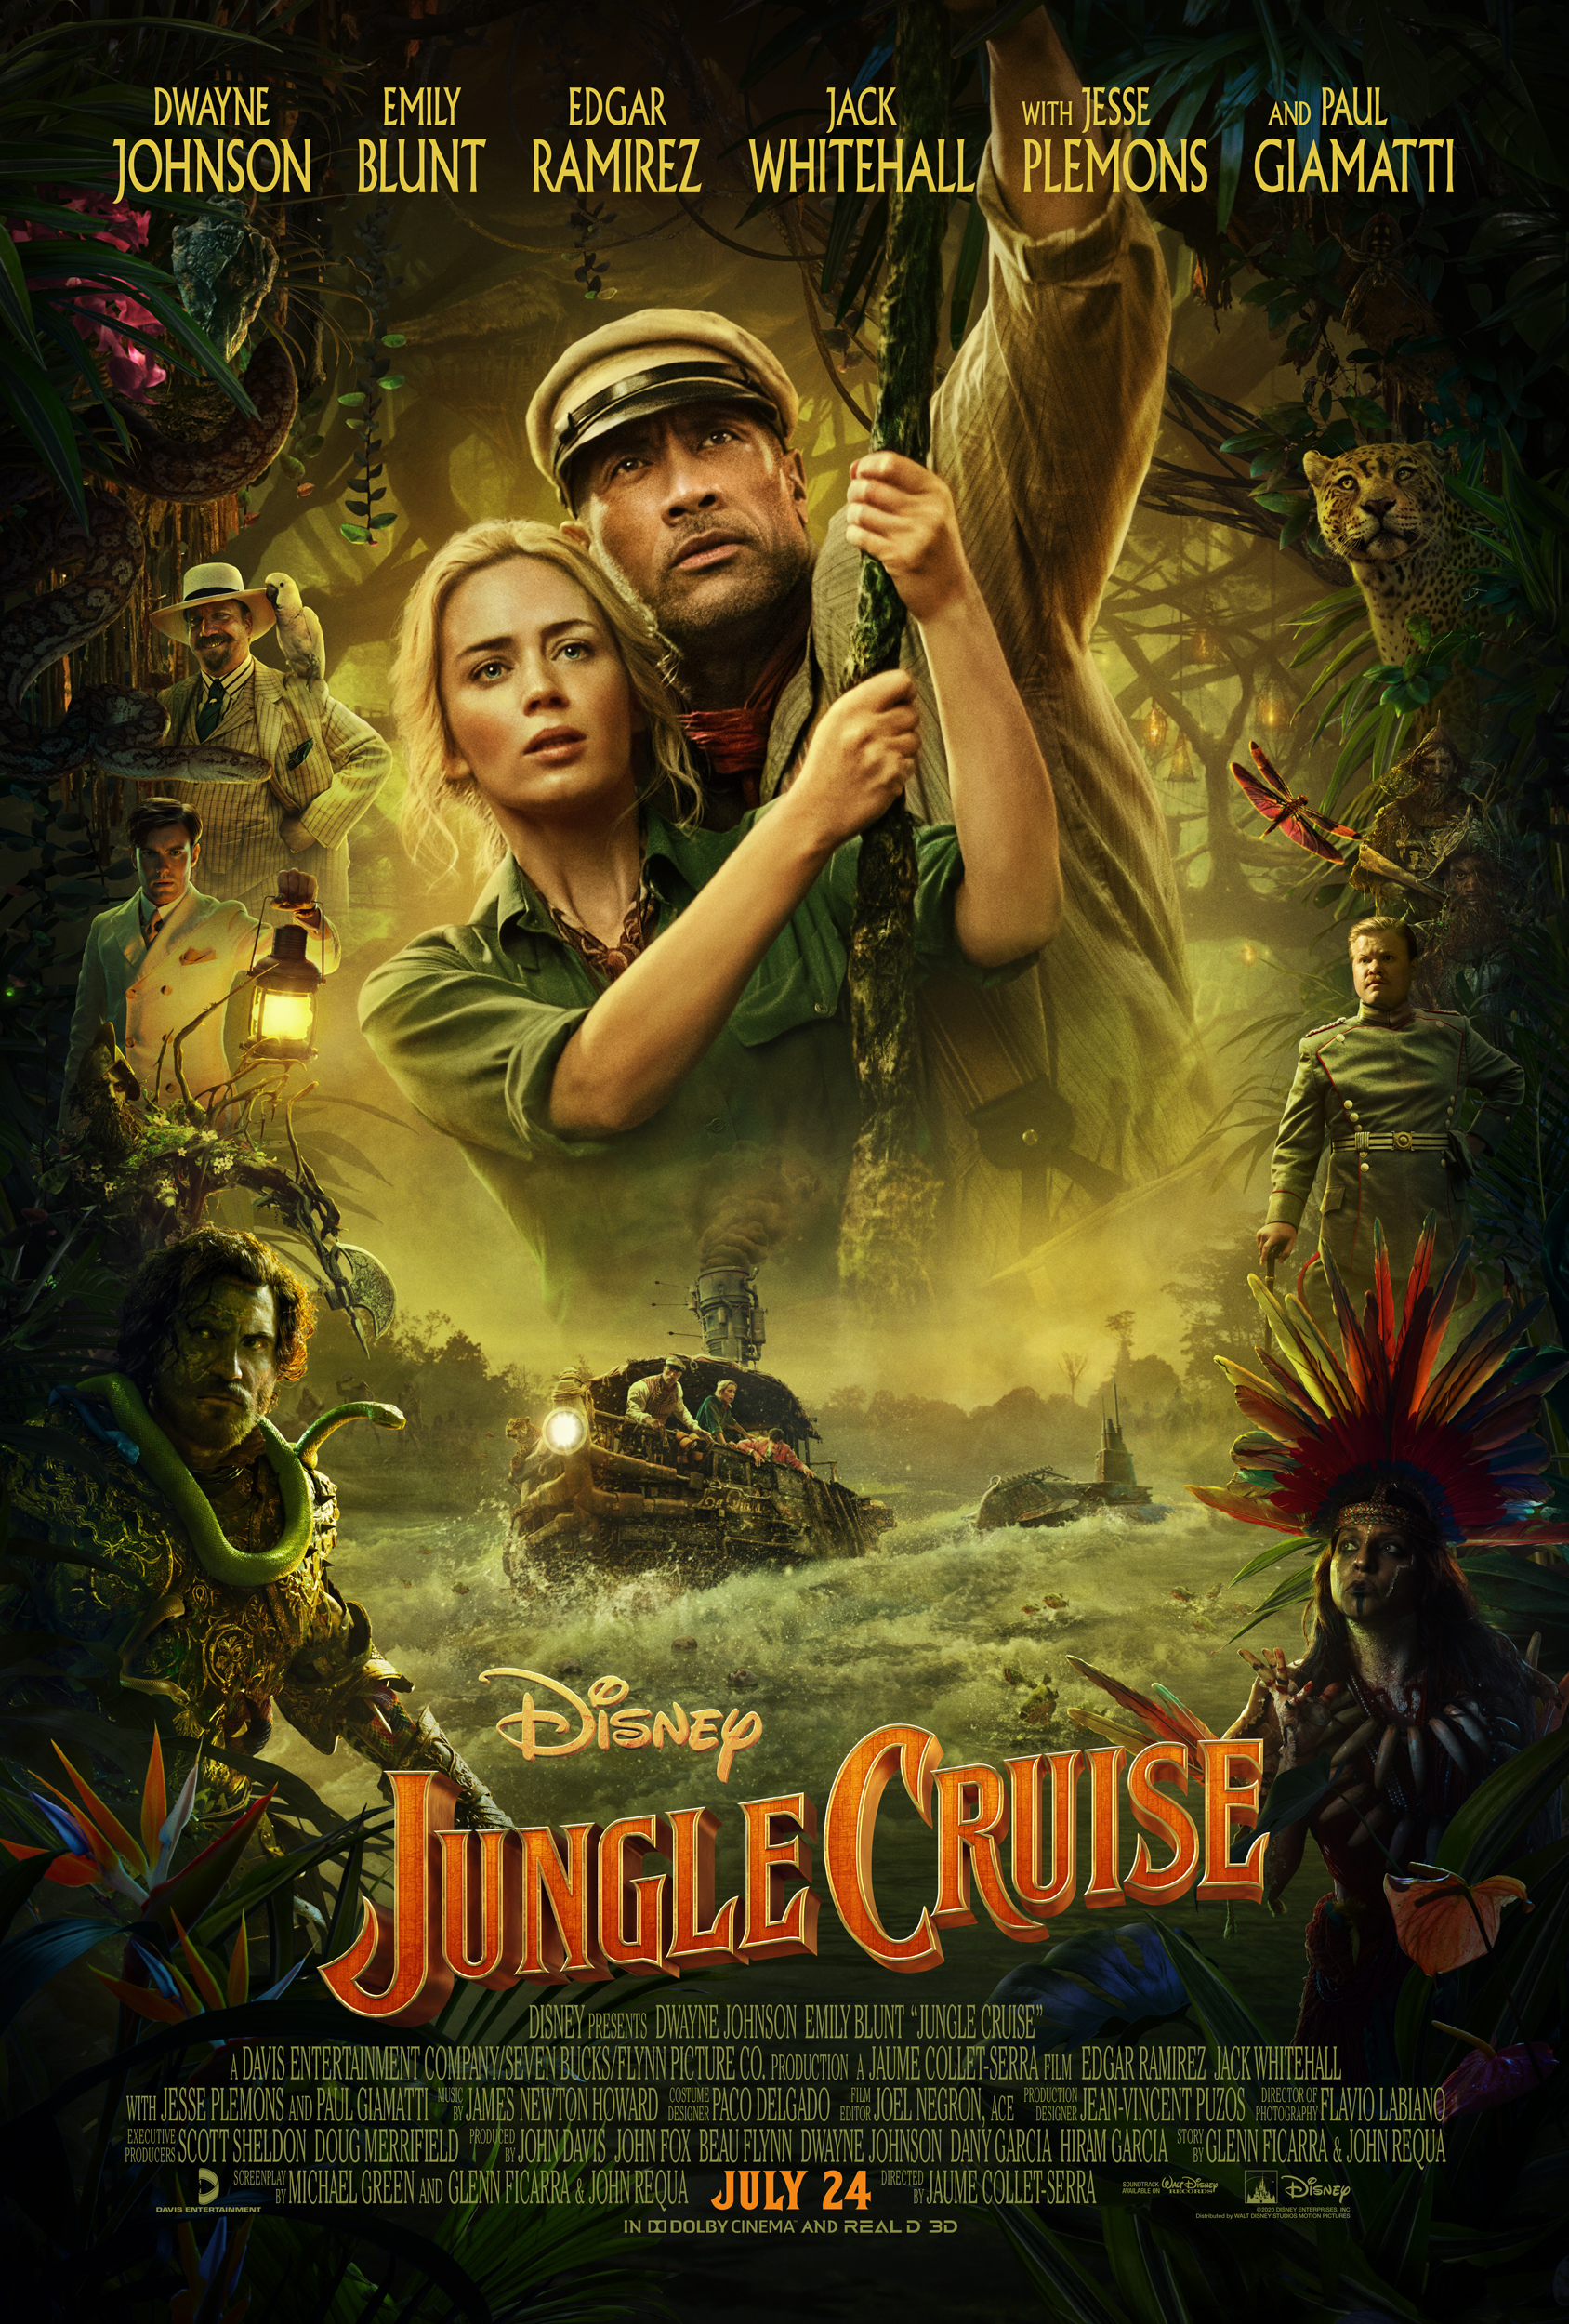 Disney's Jungle Cruise Movie Debut